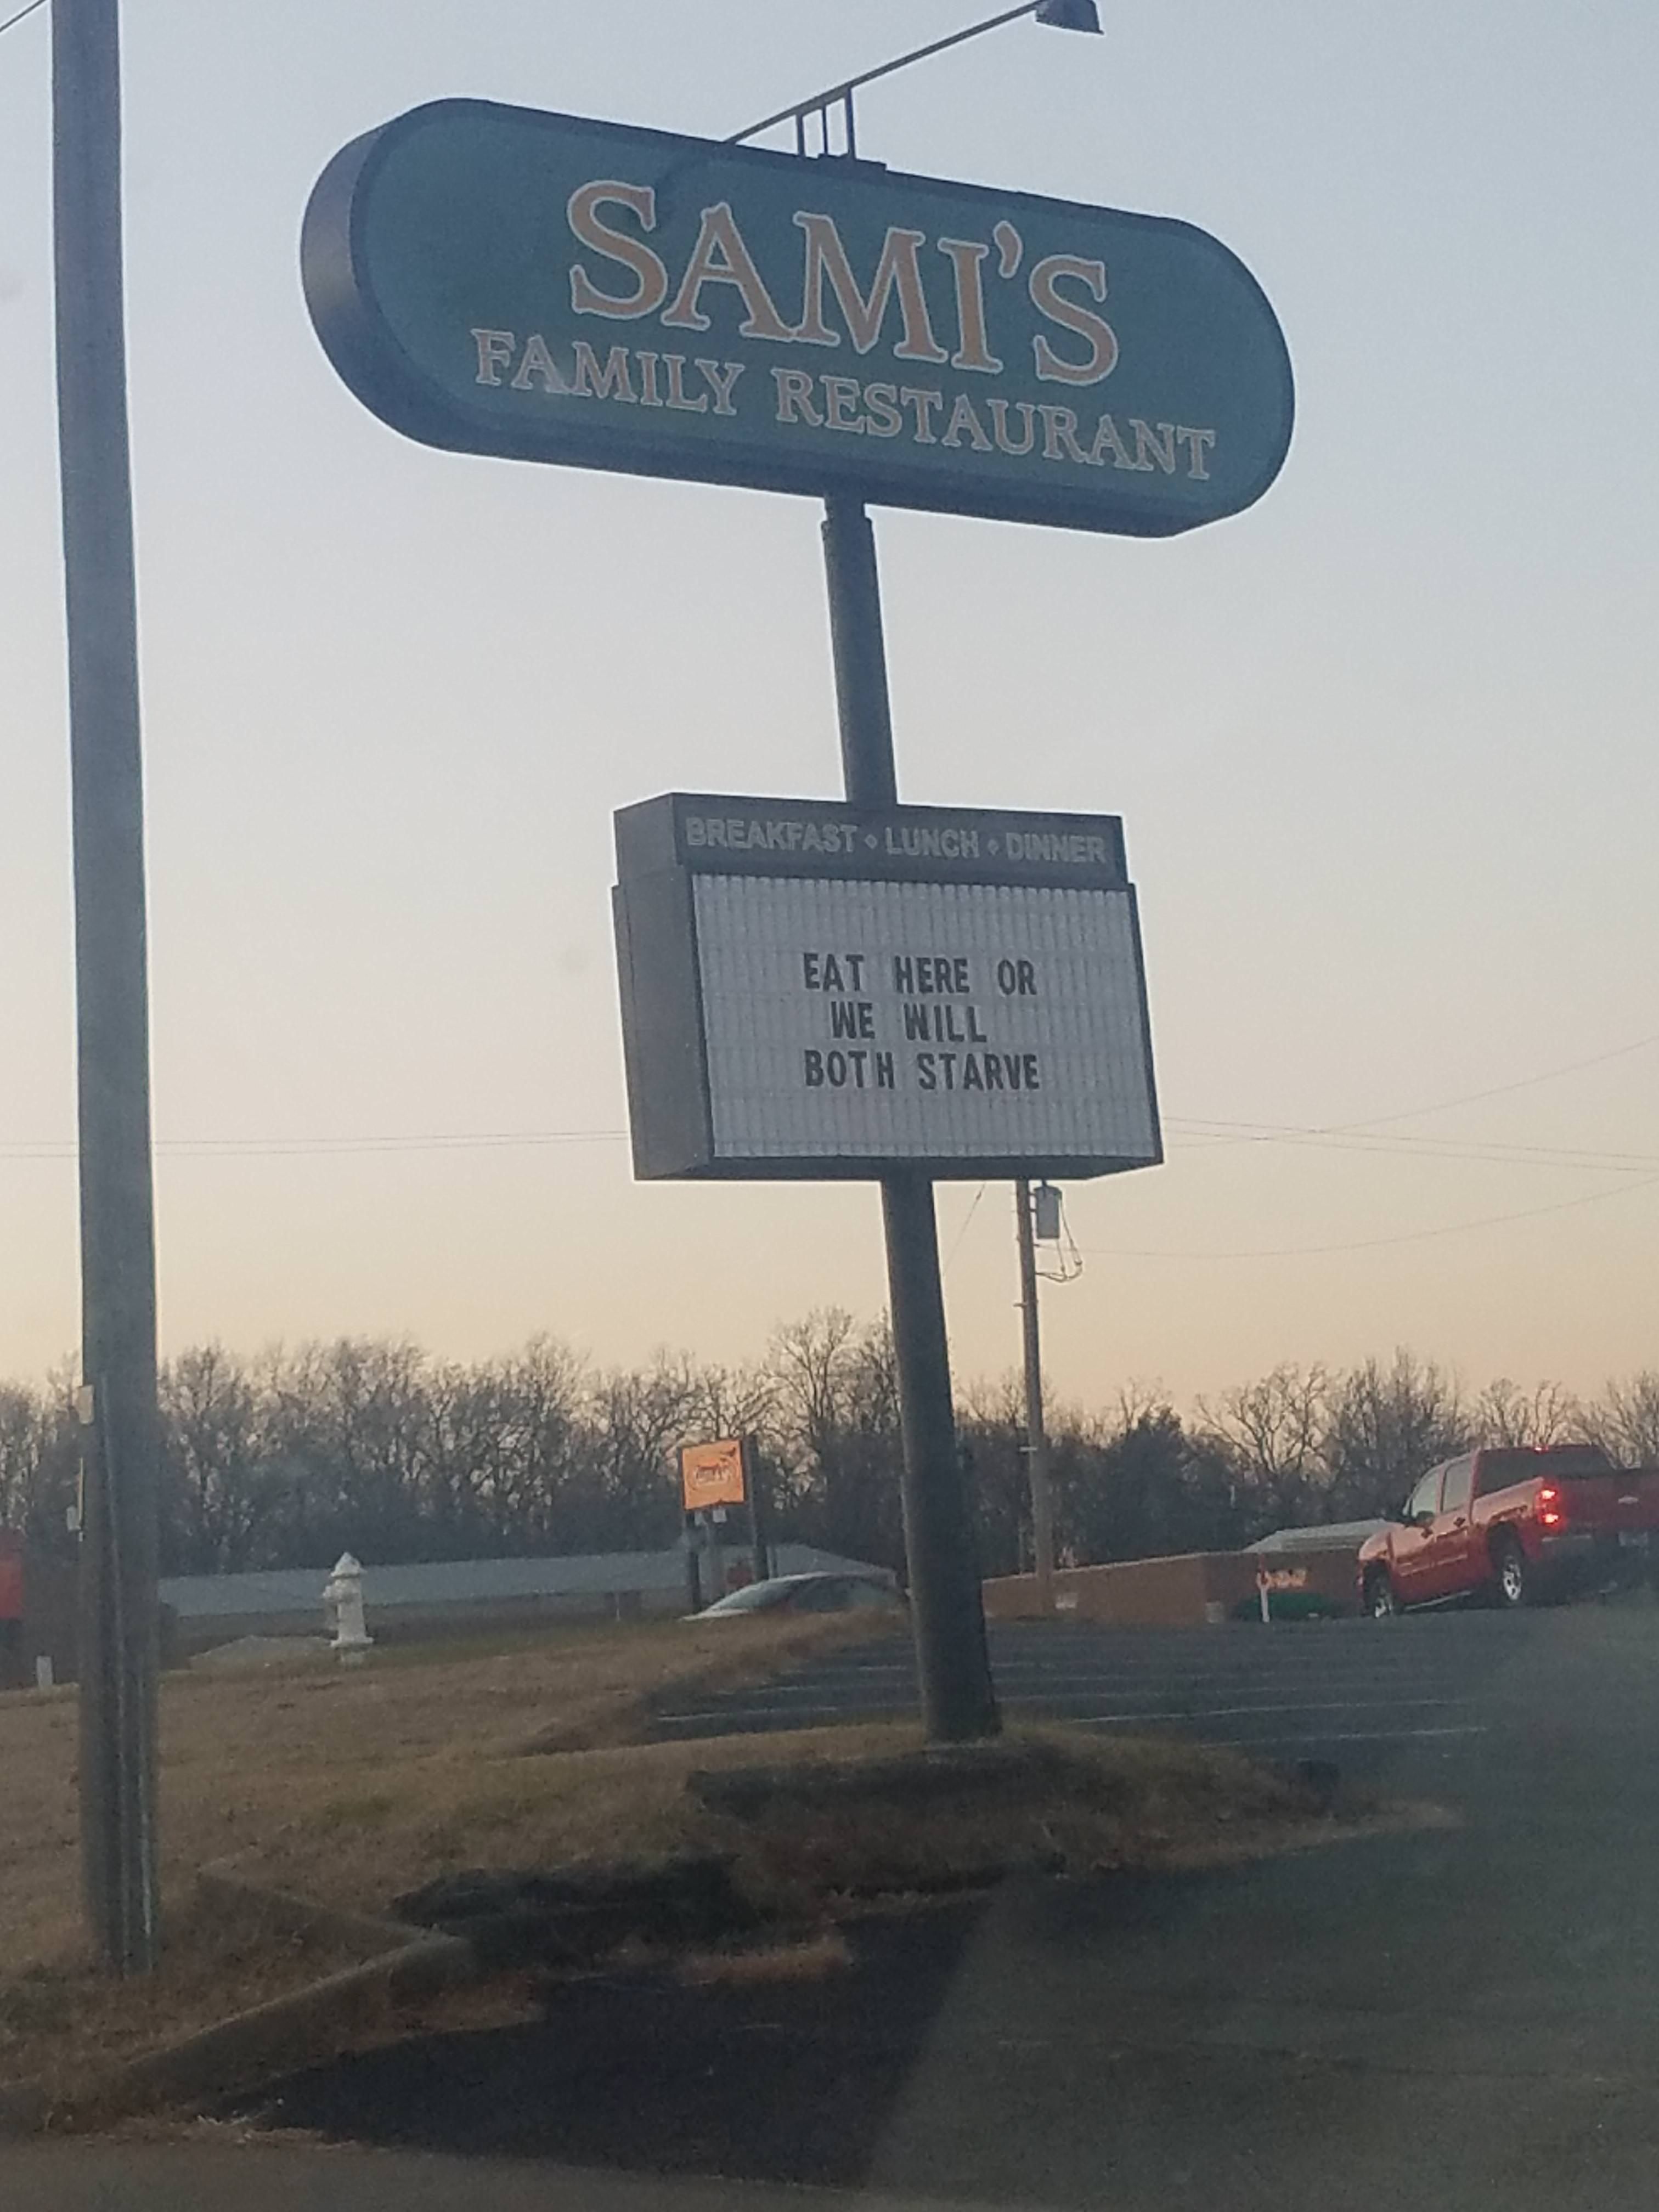 This restaurant sign